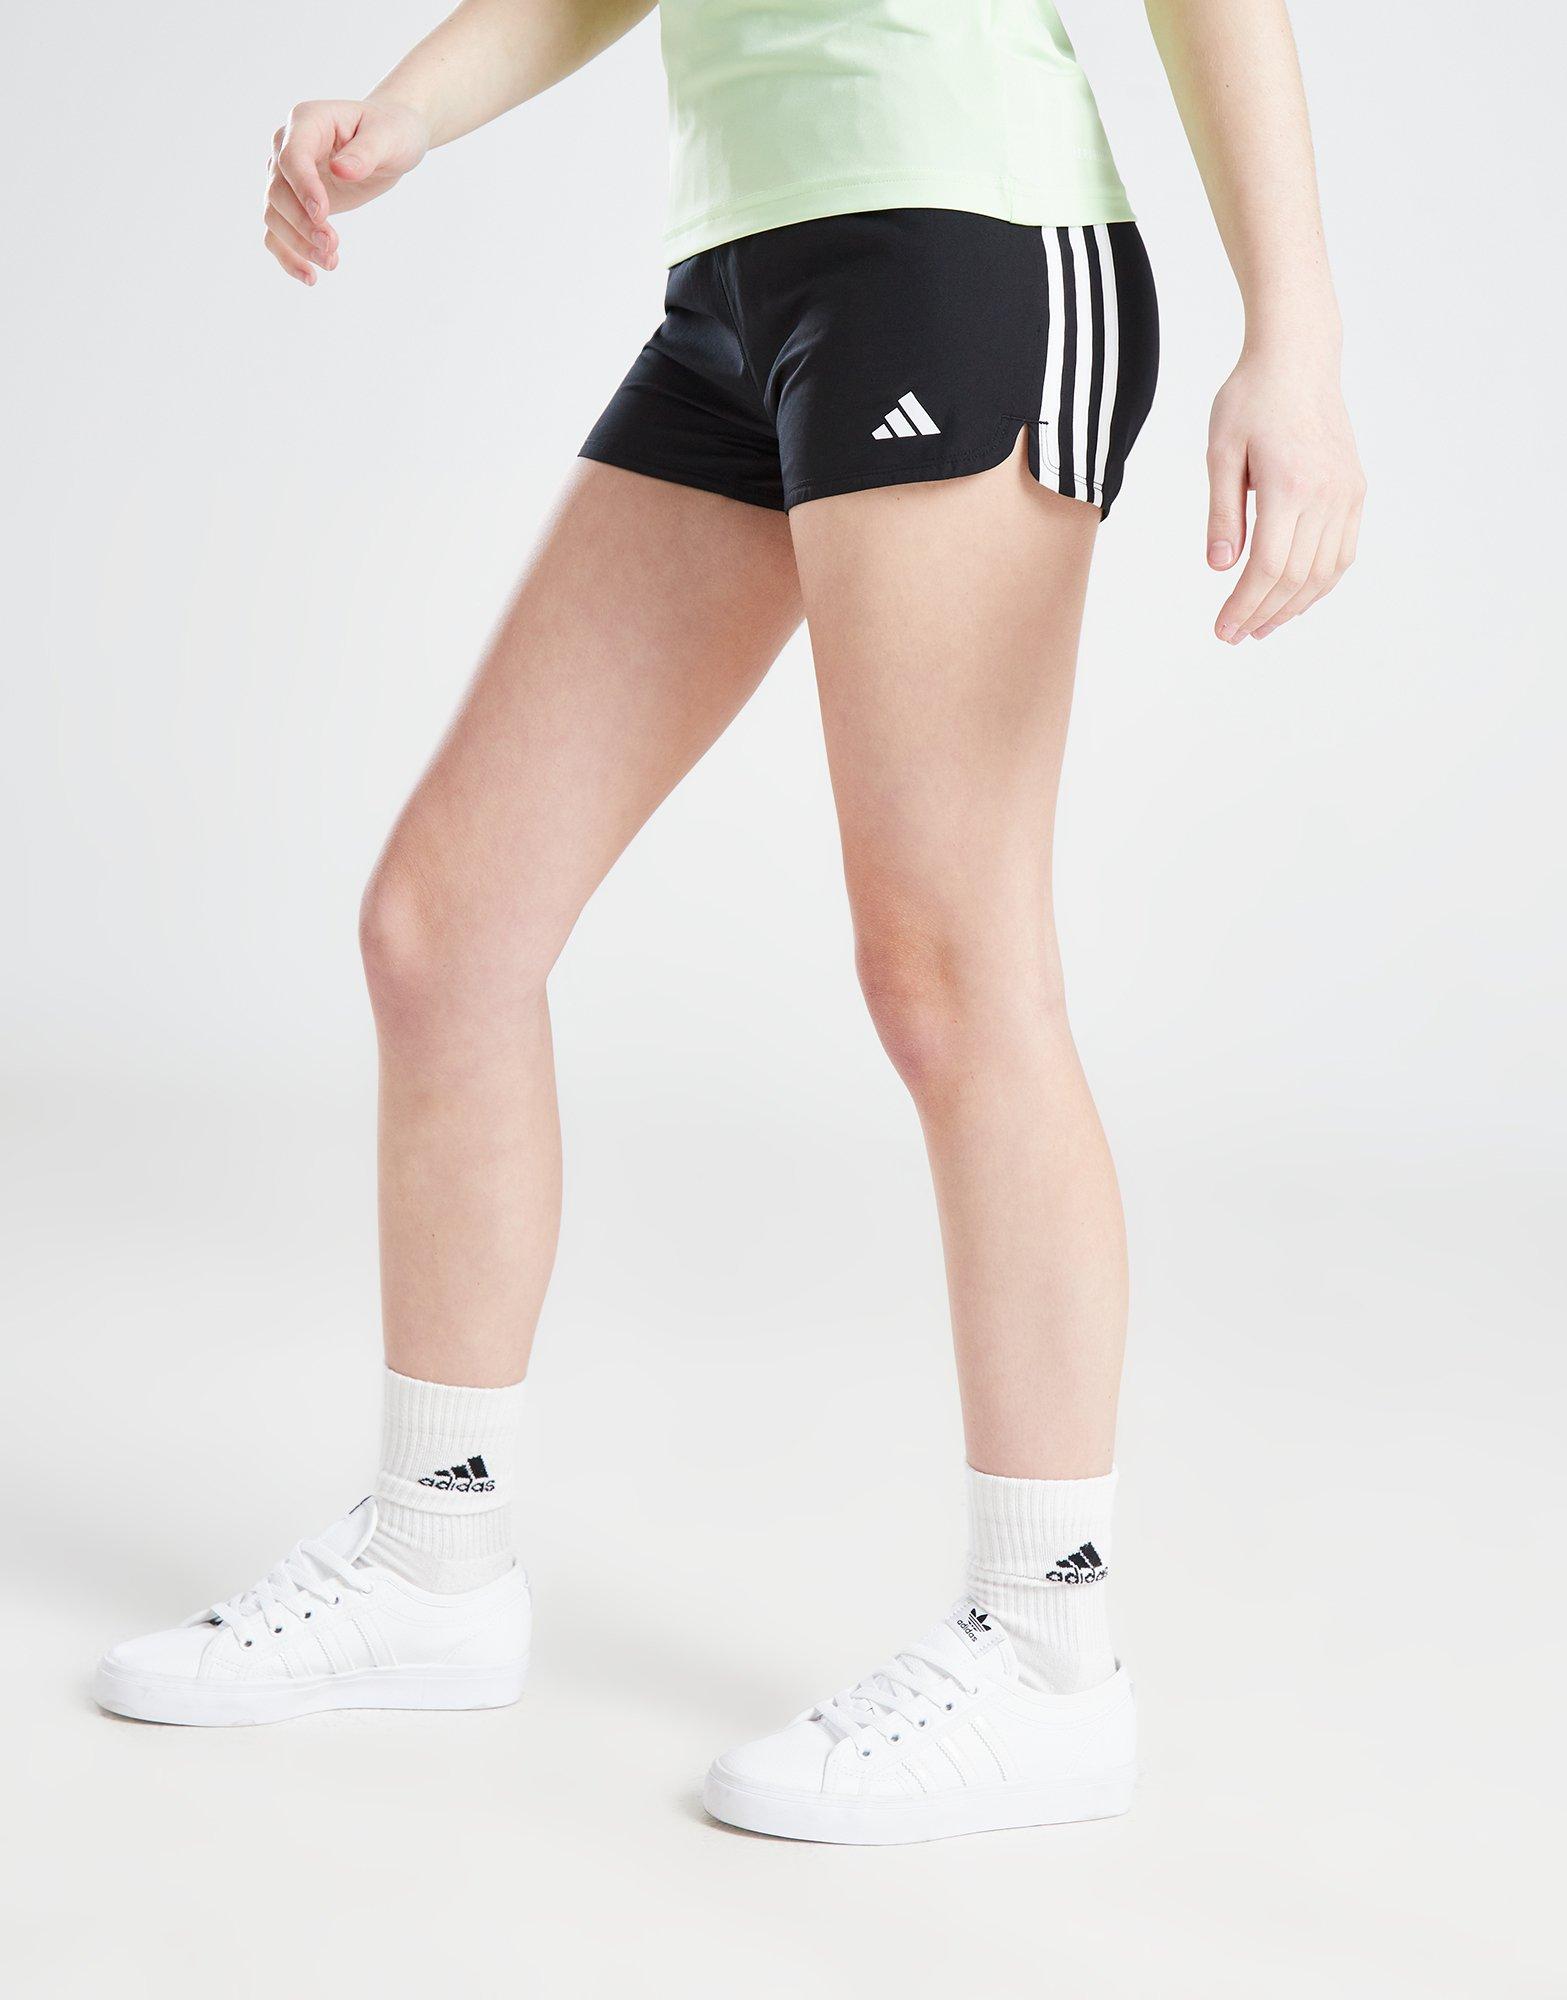 adidas AEROREADY Made for Training Minimal Two-in-One Shorts - Black |  adidas Canada